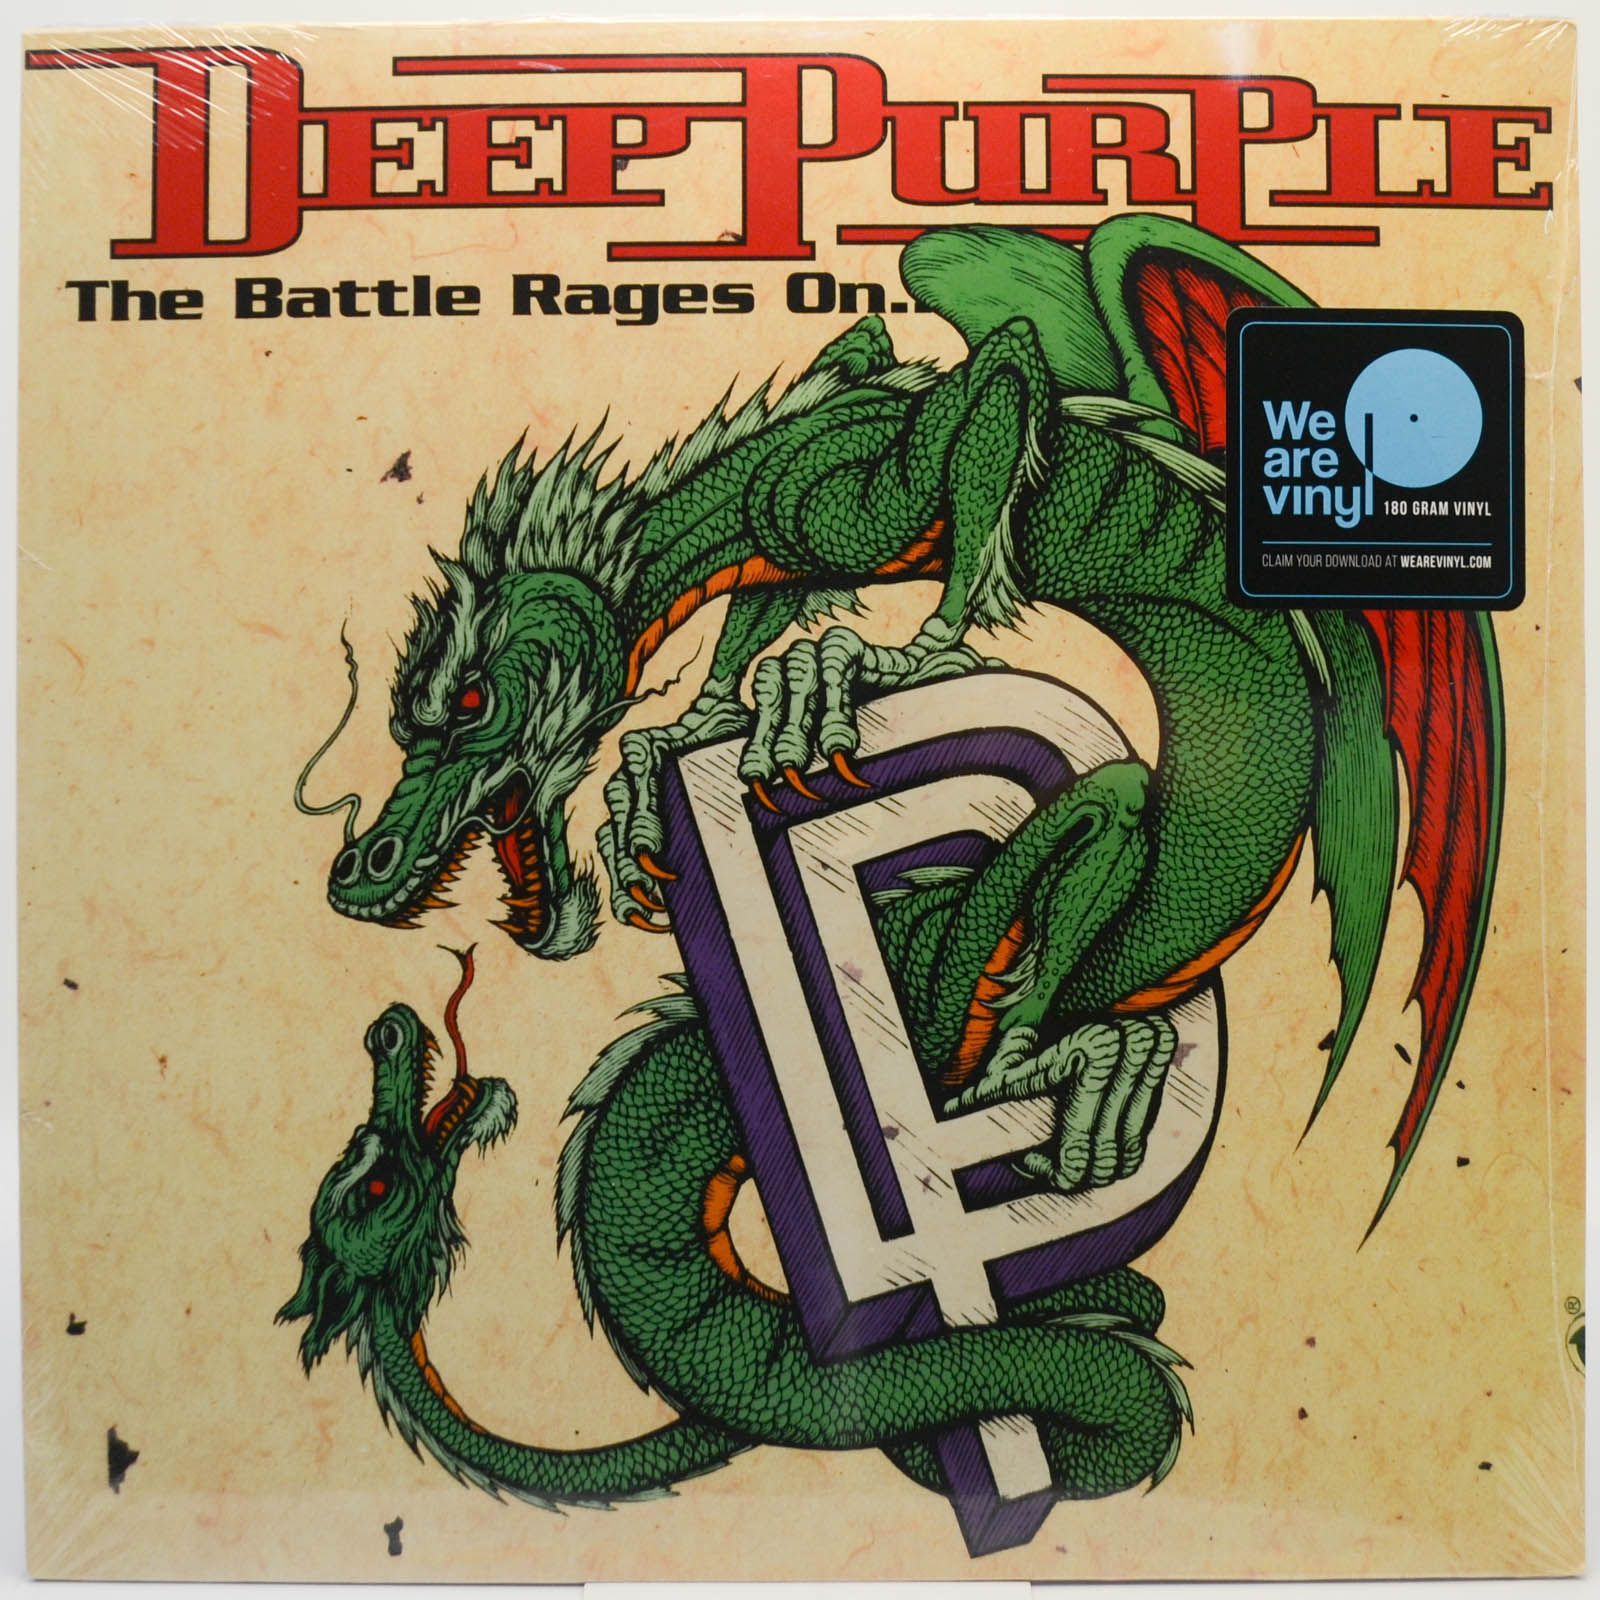 Deep Purple — The Battle Rages On..., 1993